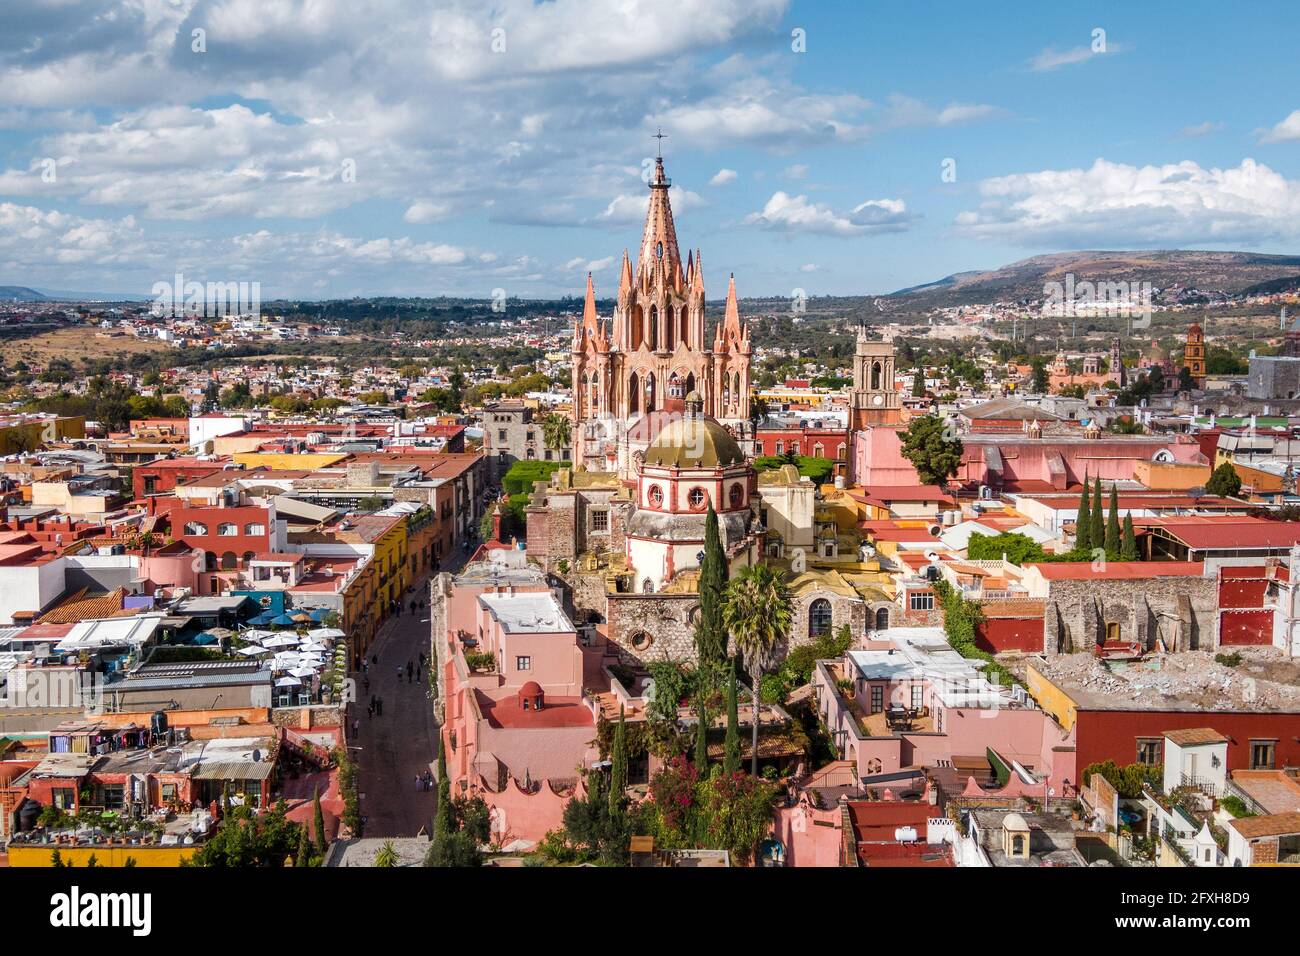 Luftaufnahme von San Miguel de Allende in Guanajuato, Mexiko. Stockfoto